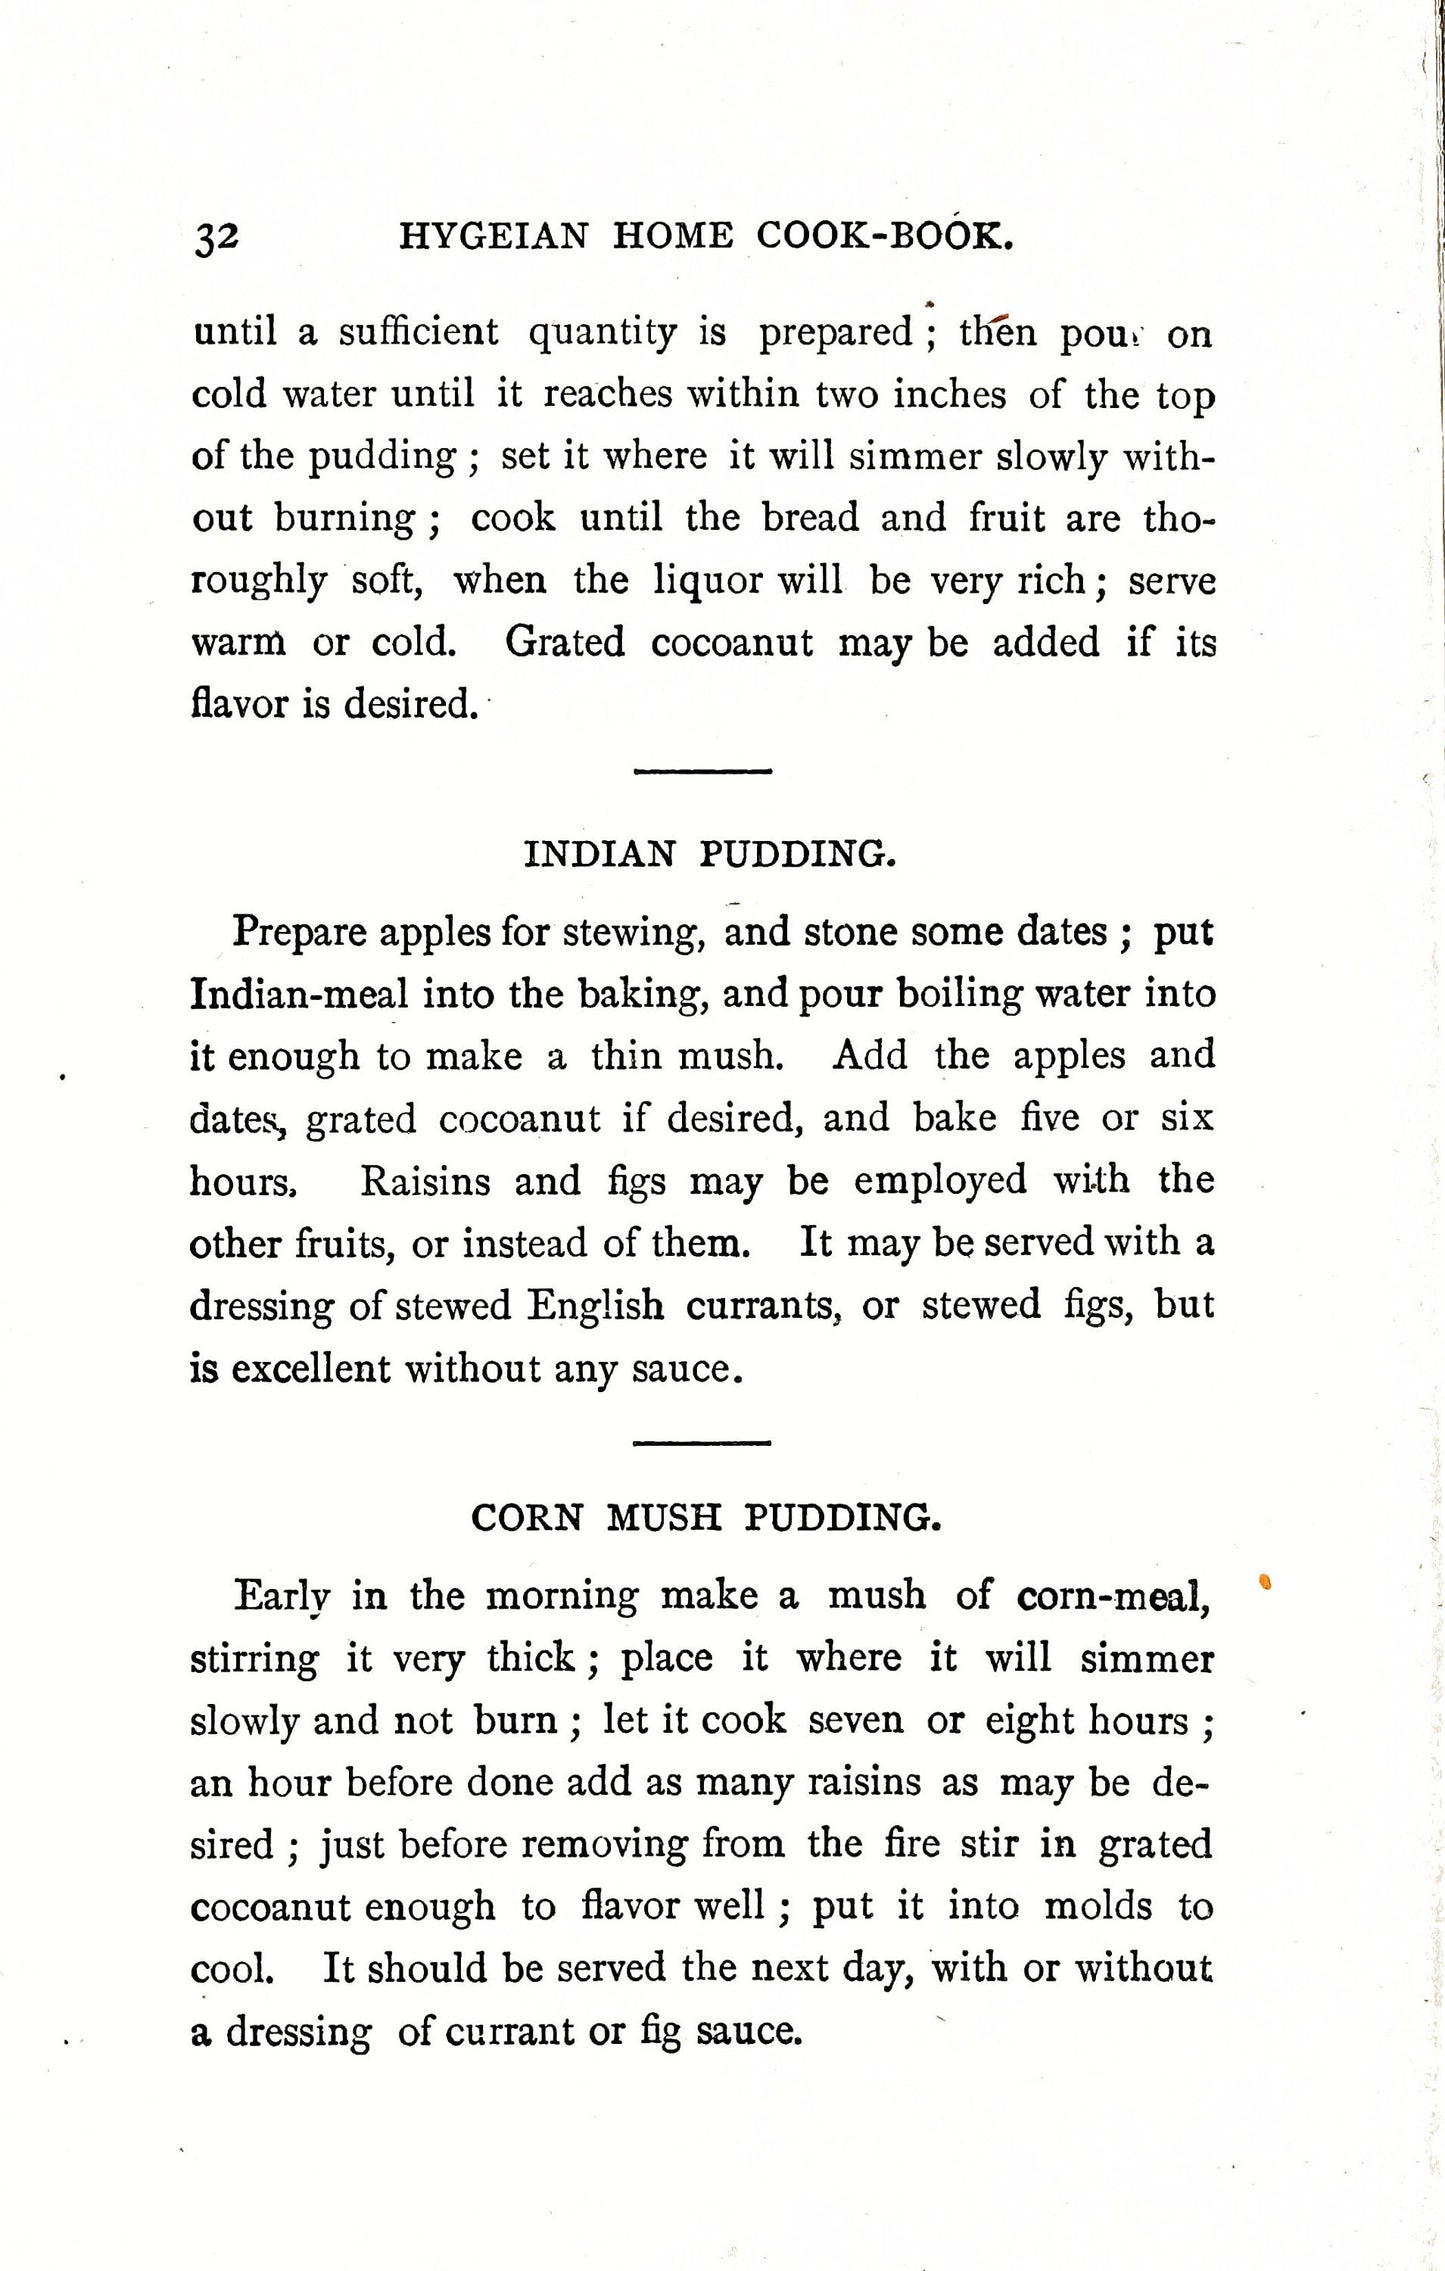 The Hygeian Home Cookbook [100+ Recipes]